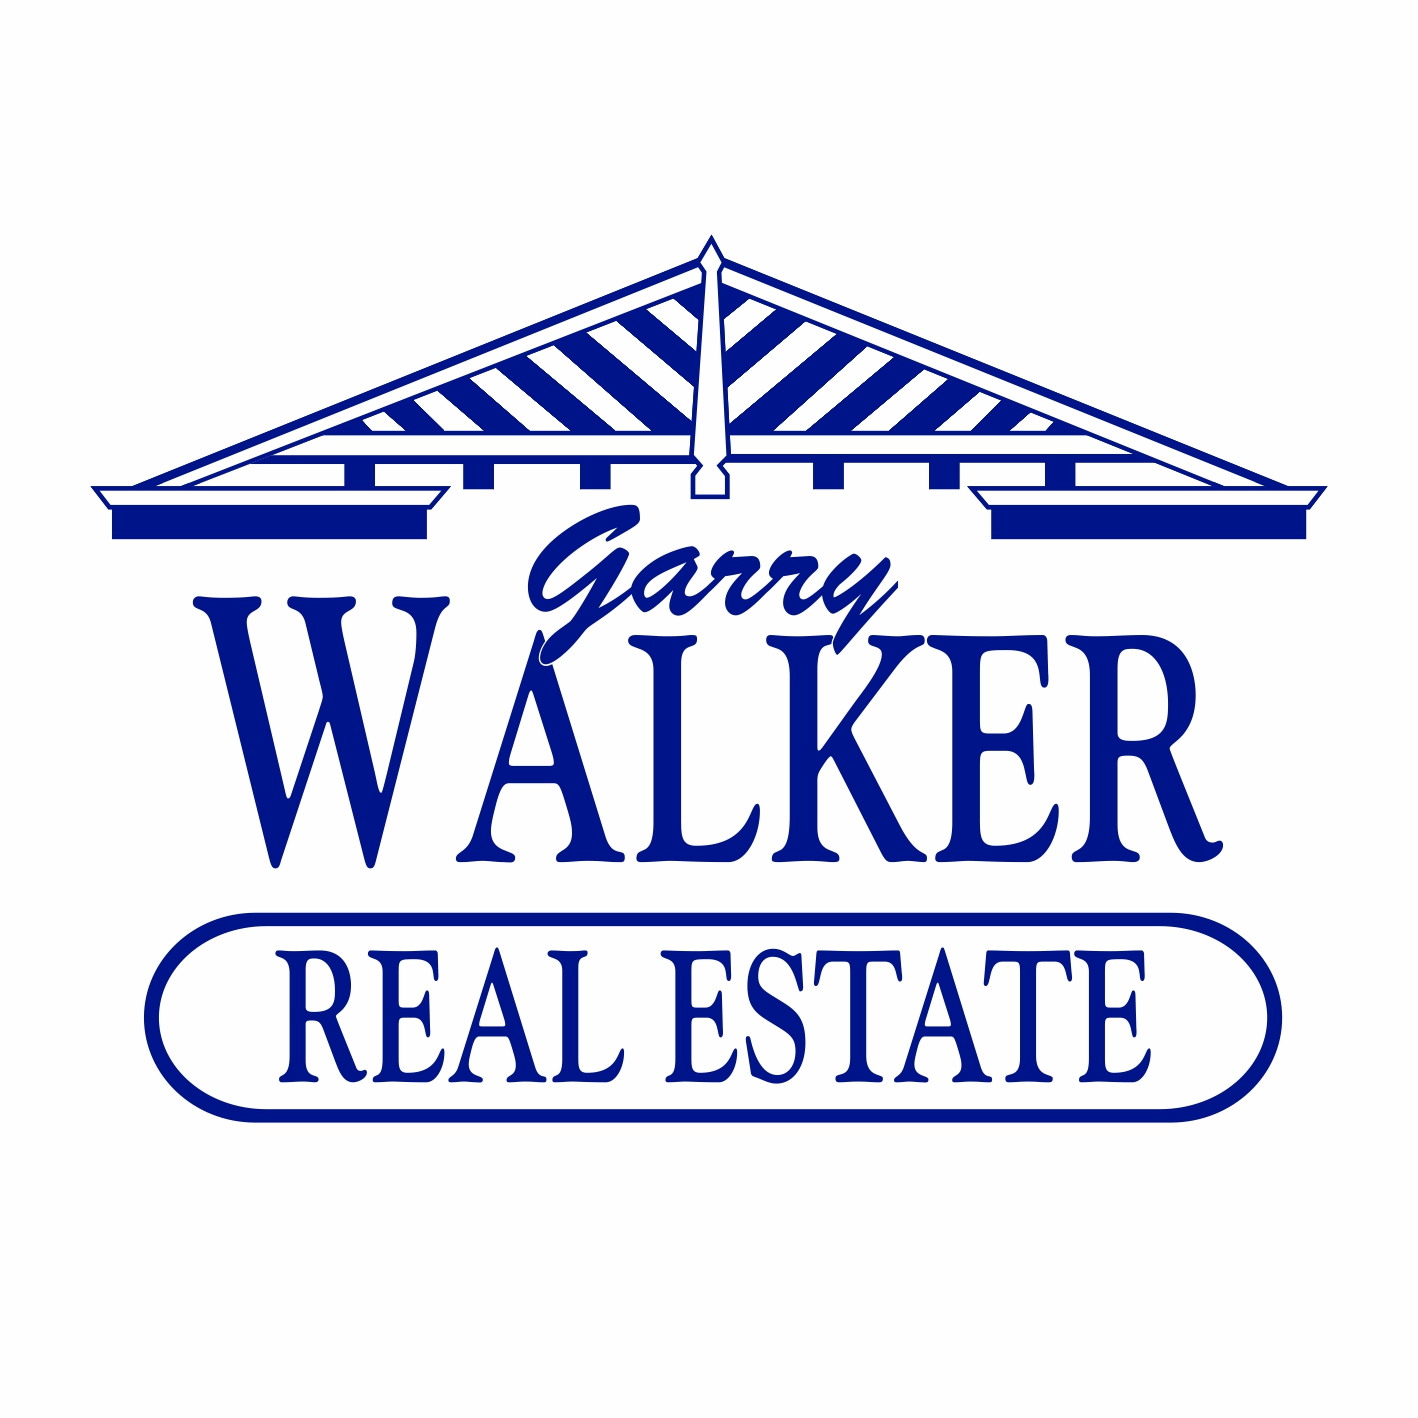 Walker Real Estate - Earlville, QLD 4870 - (07) 4033 2033 | ShowMeLocal.com